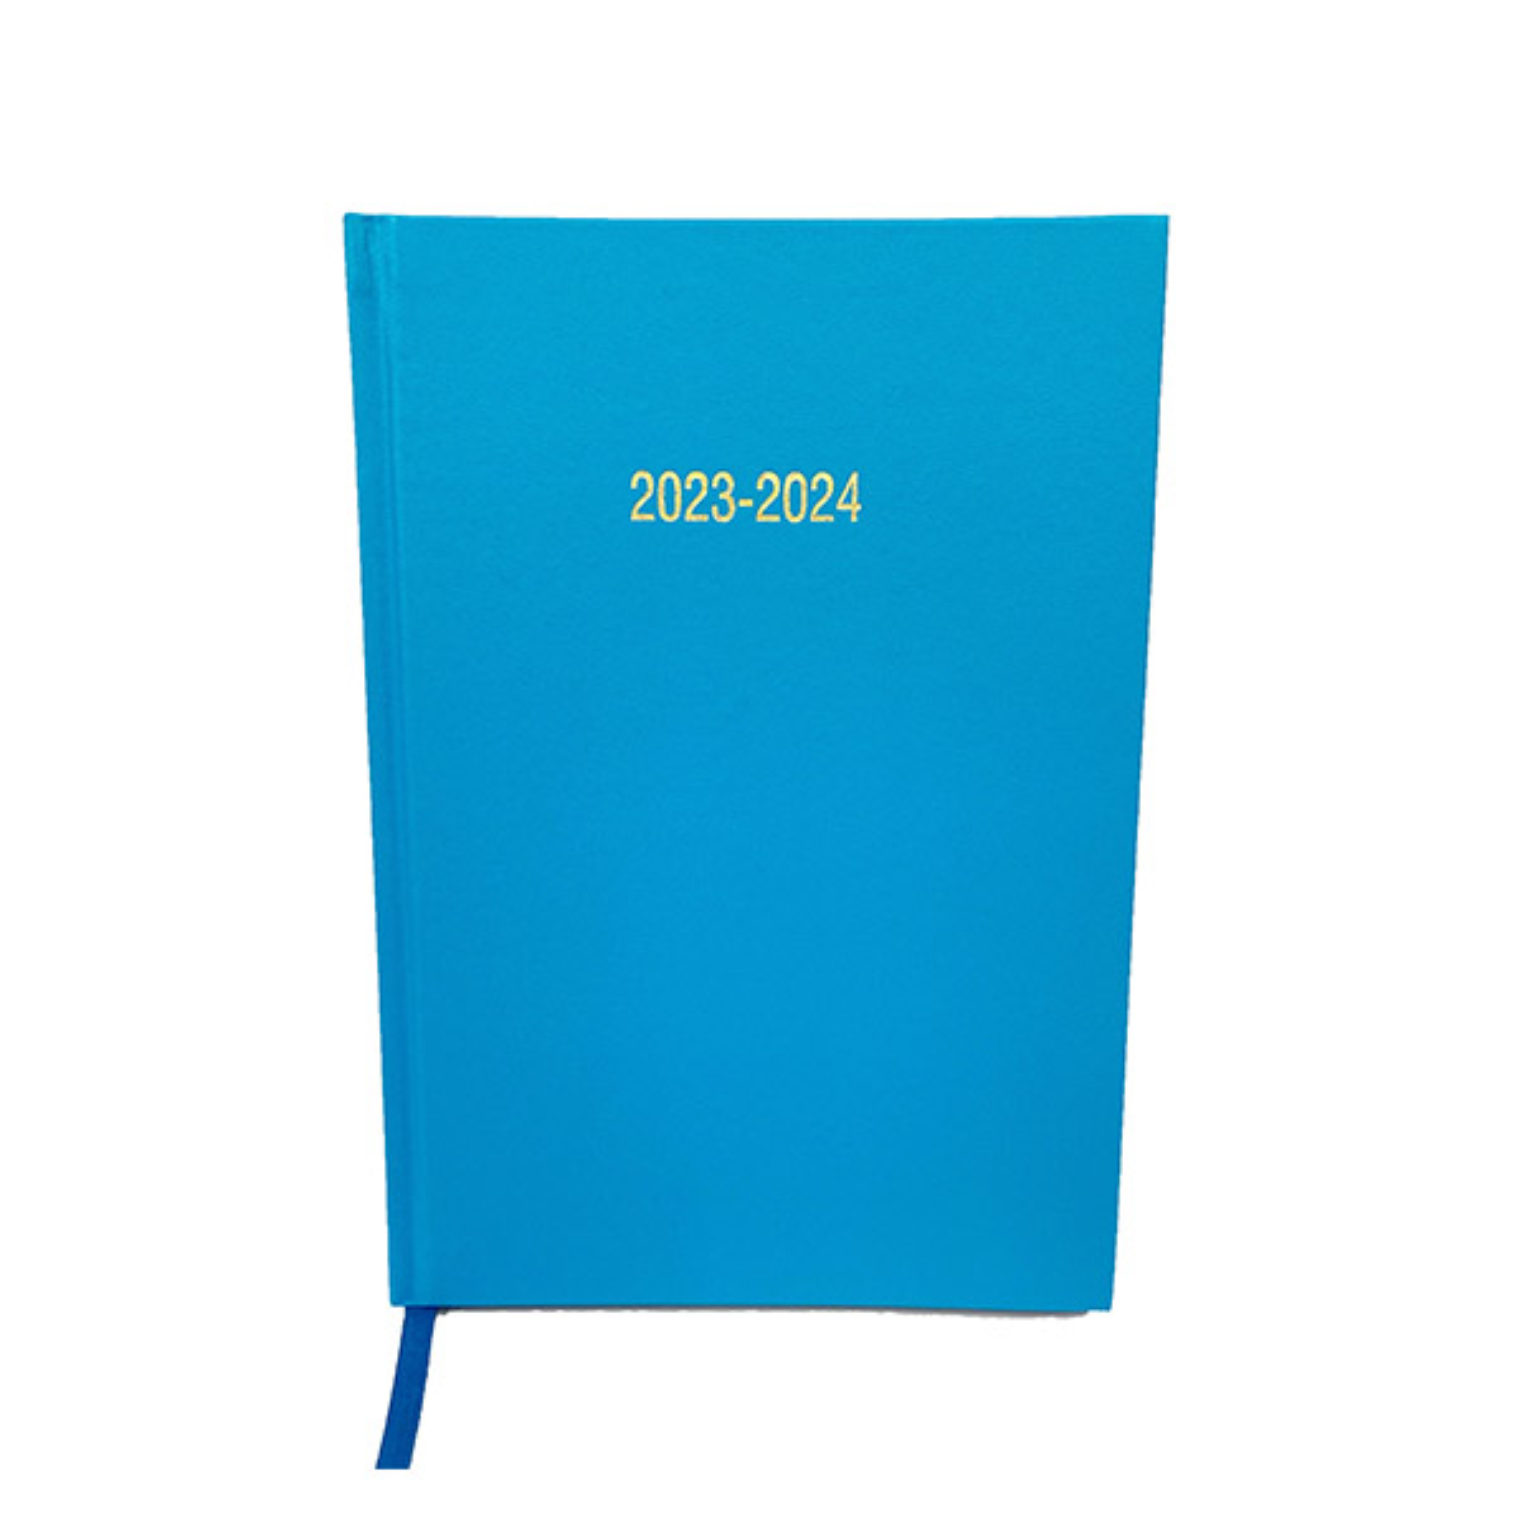 2023/24 Academic Diaries - Sky Blue